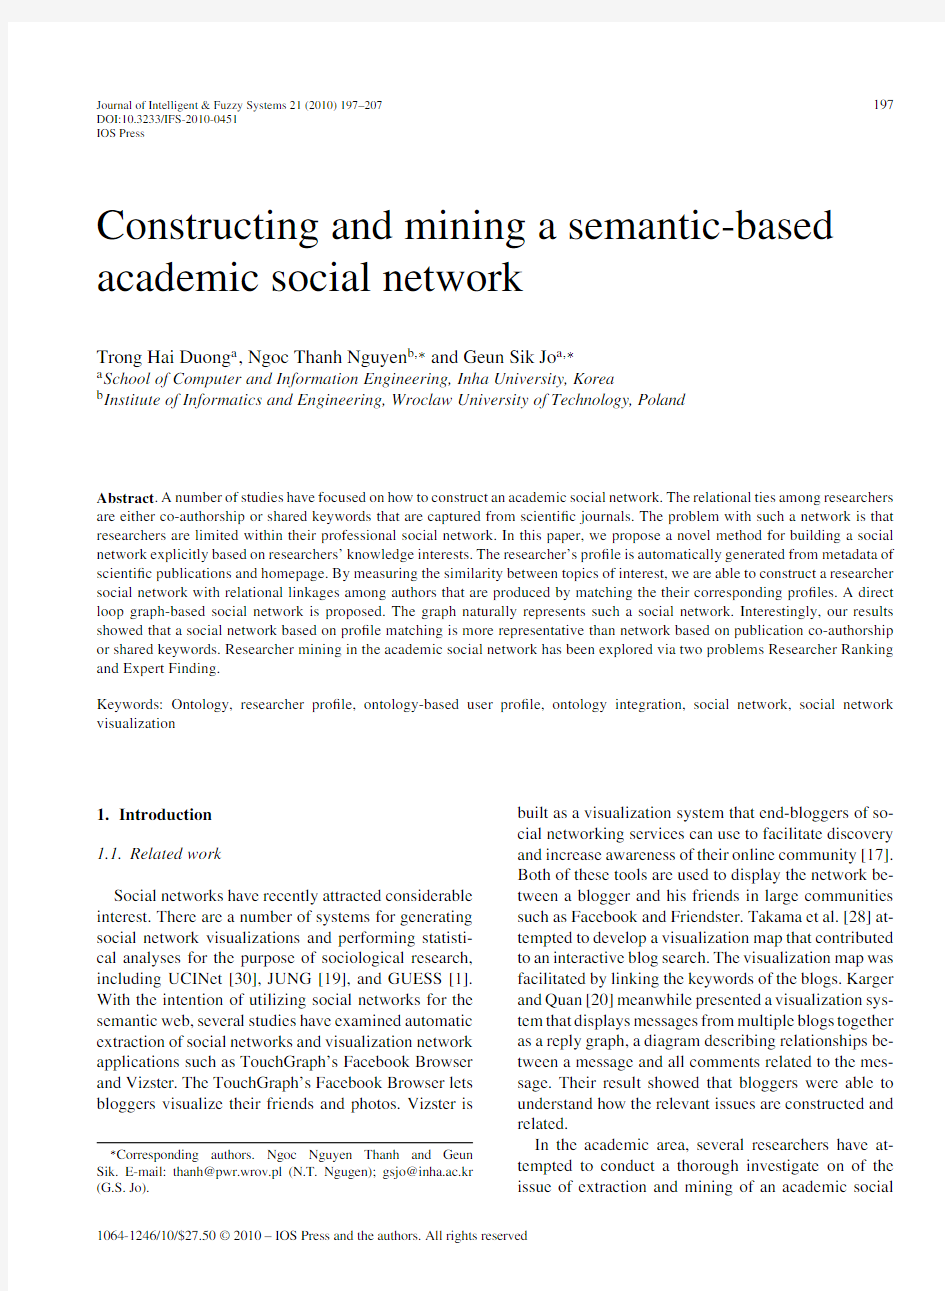 constructing and mining a semantic-based academic social network